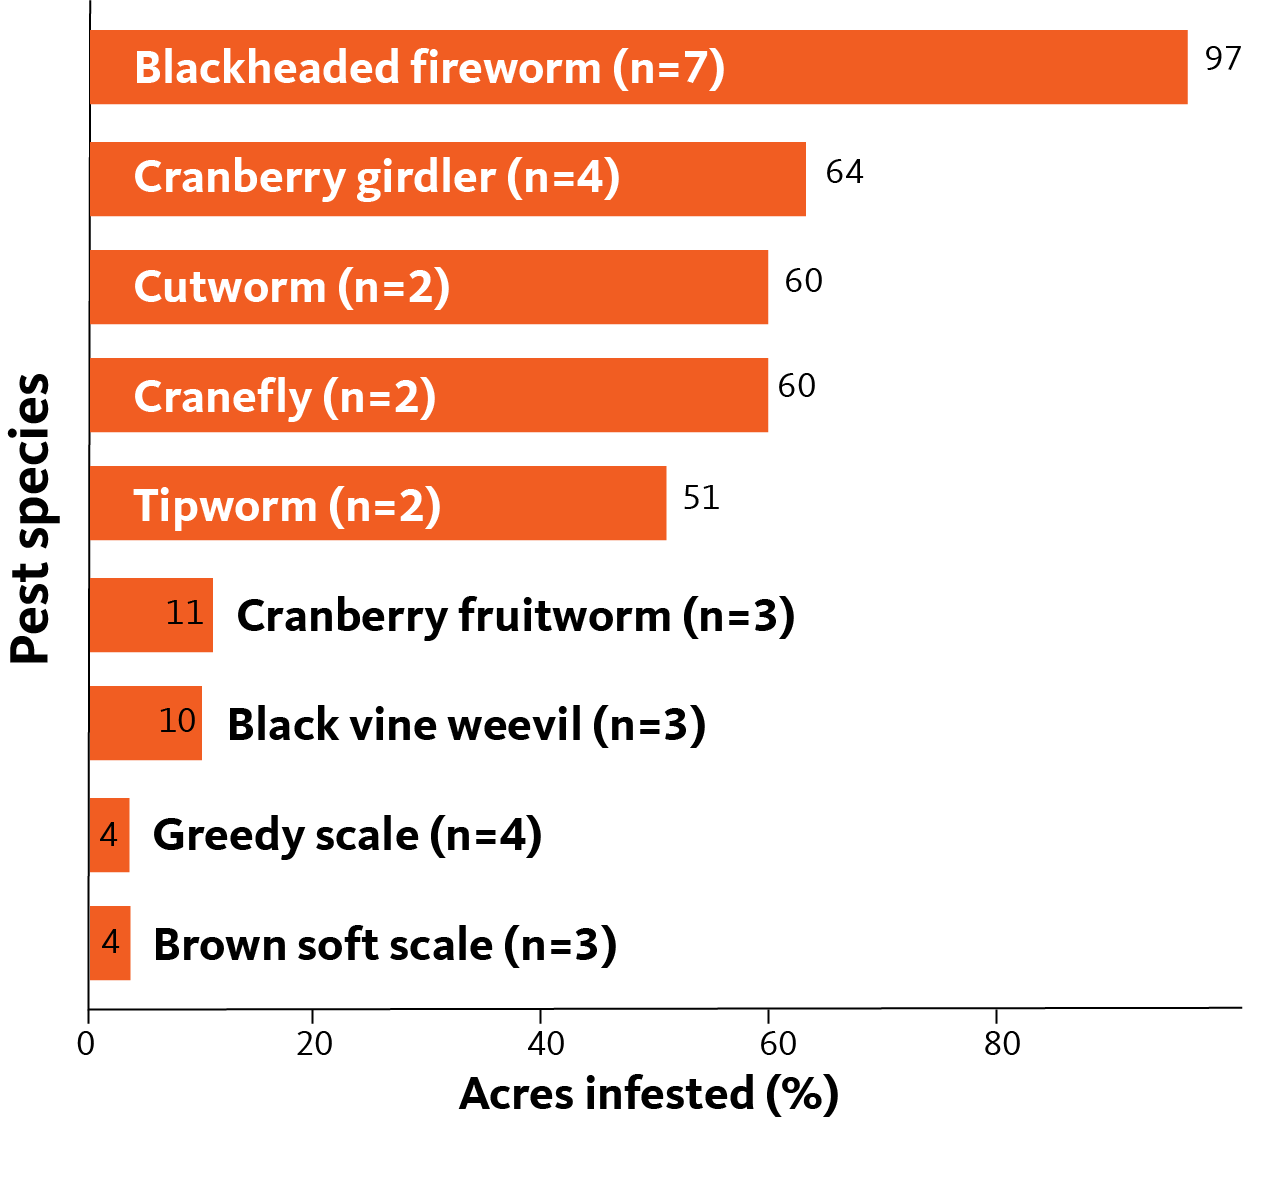 Bar chart showing blackheaded firework infesting most acreage